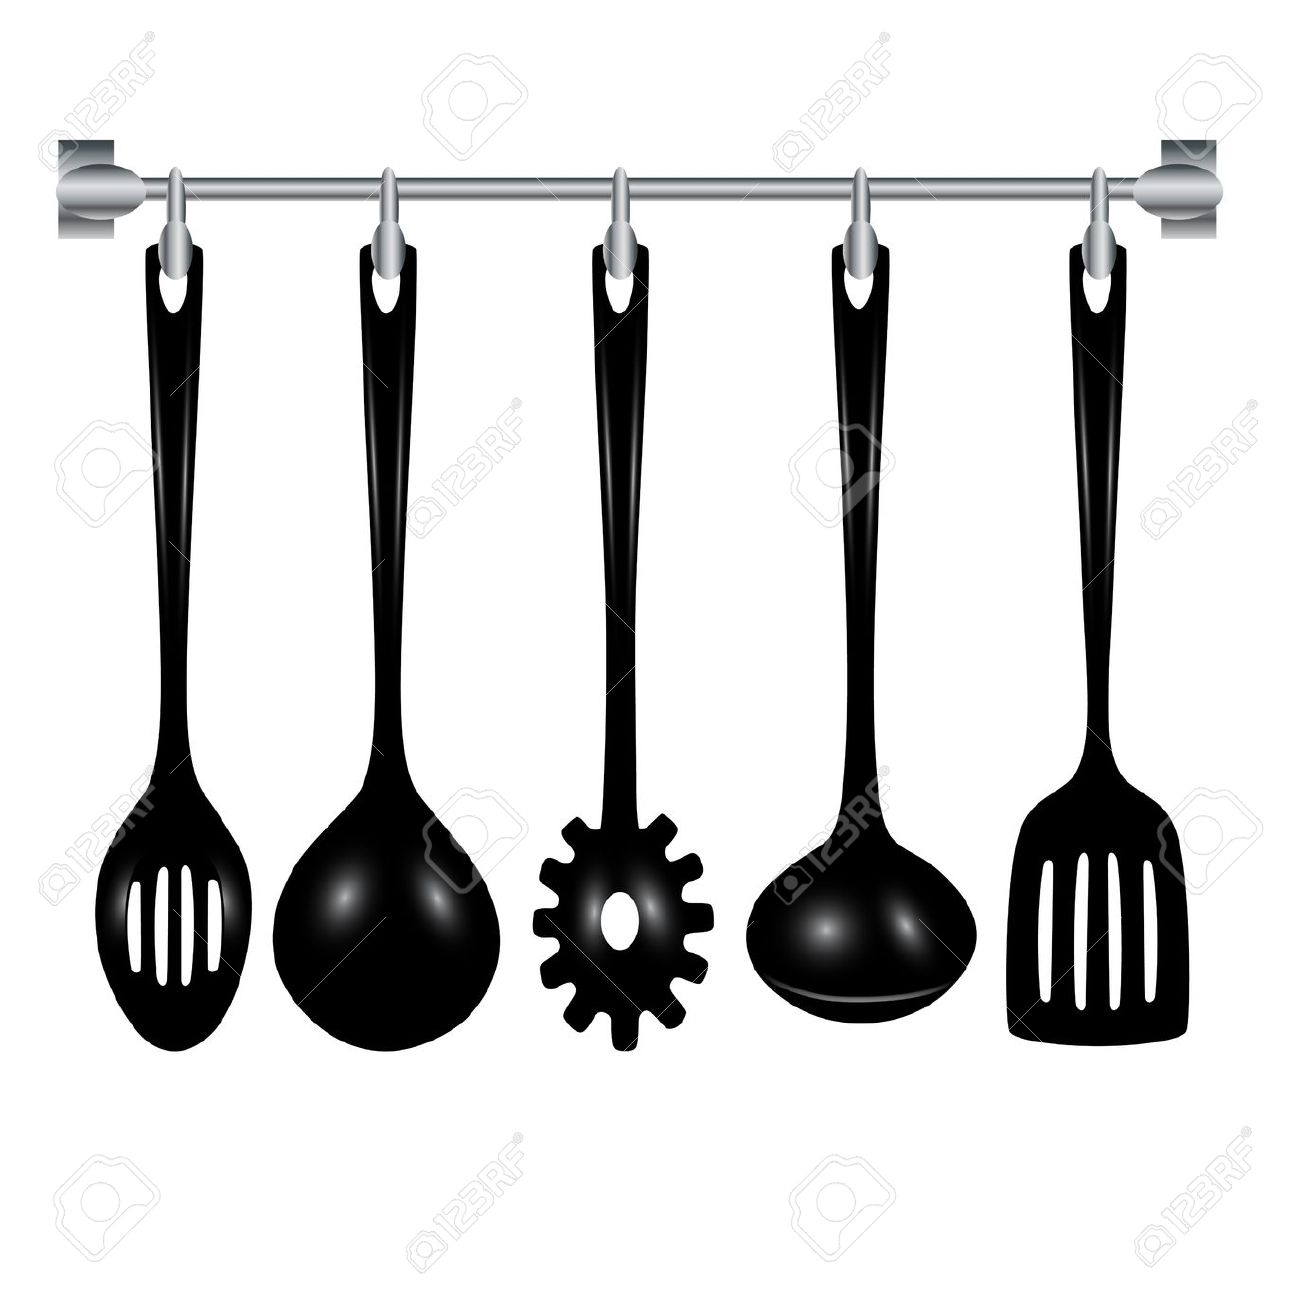 Cooking utensils clipart.